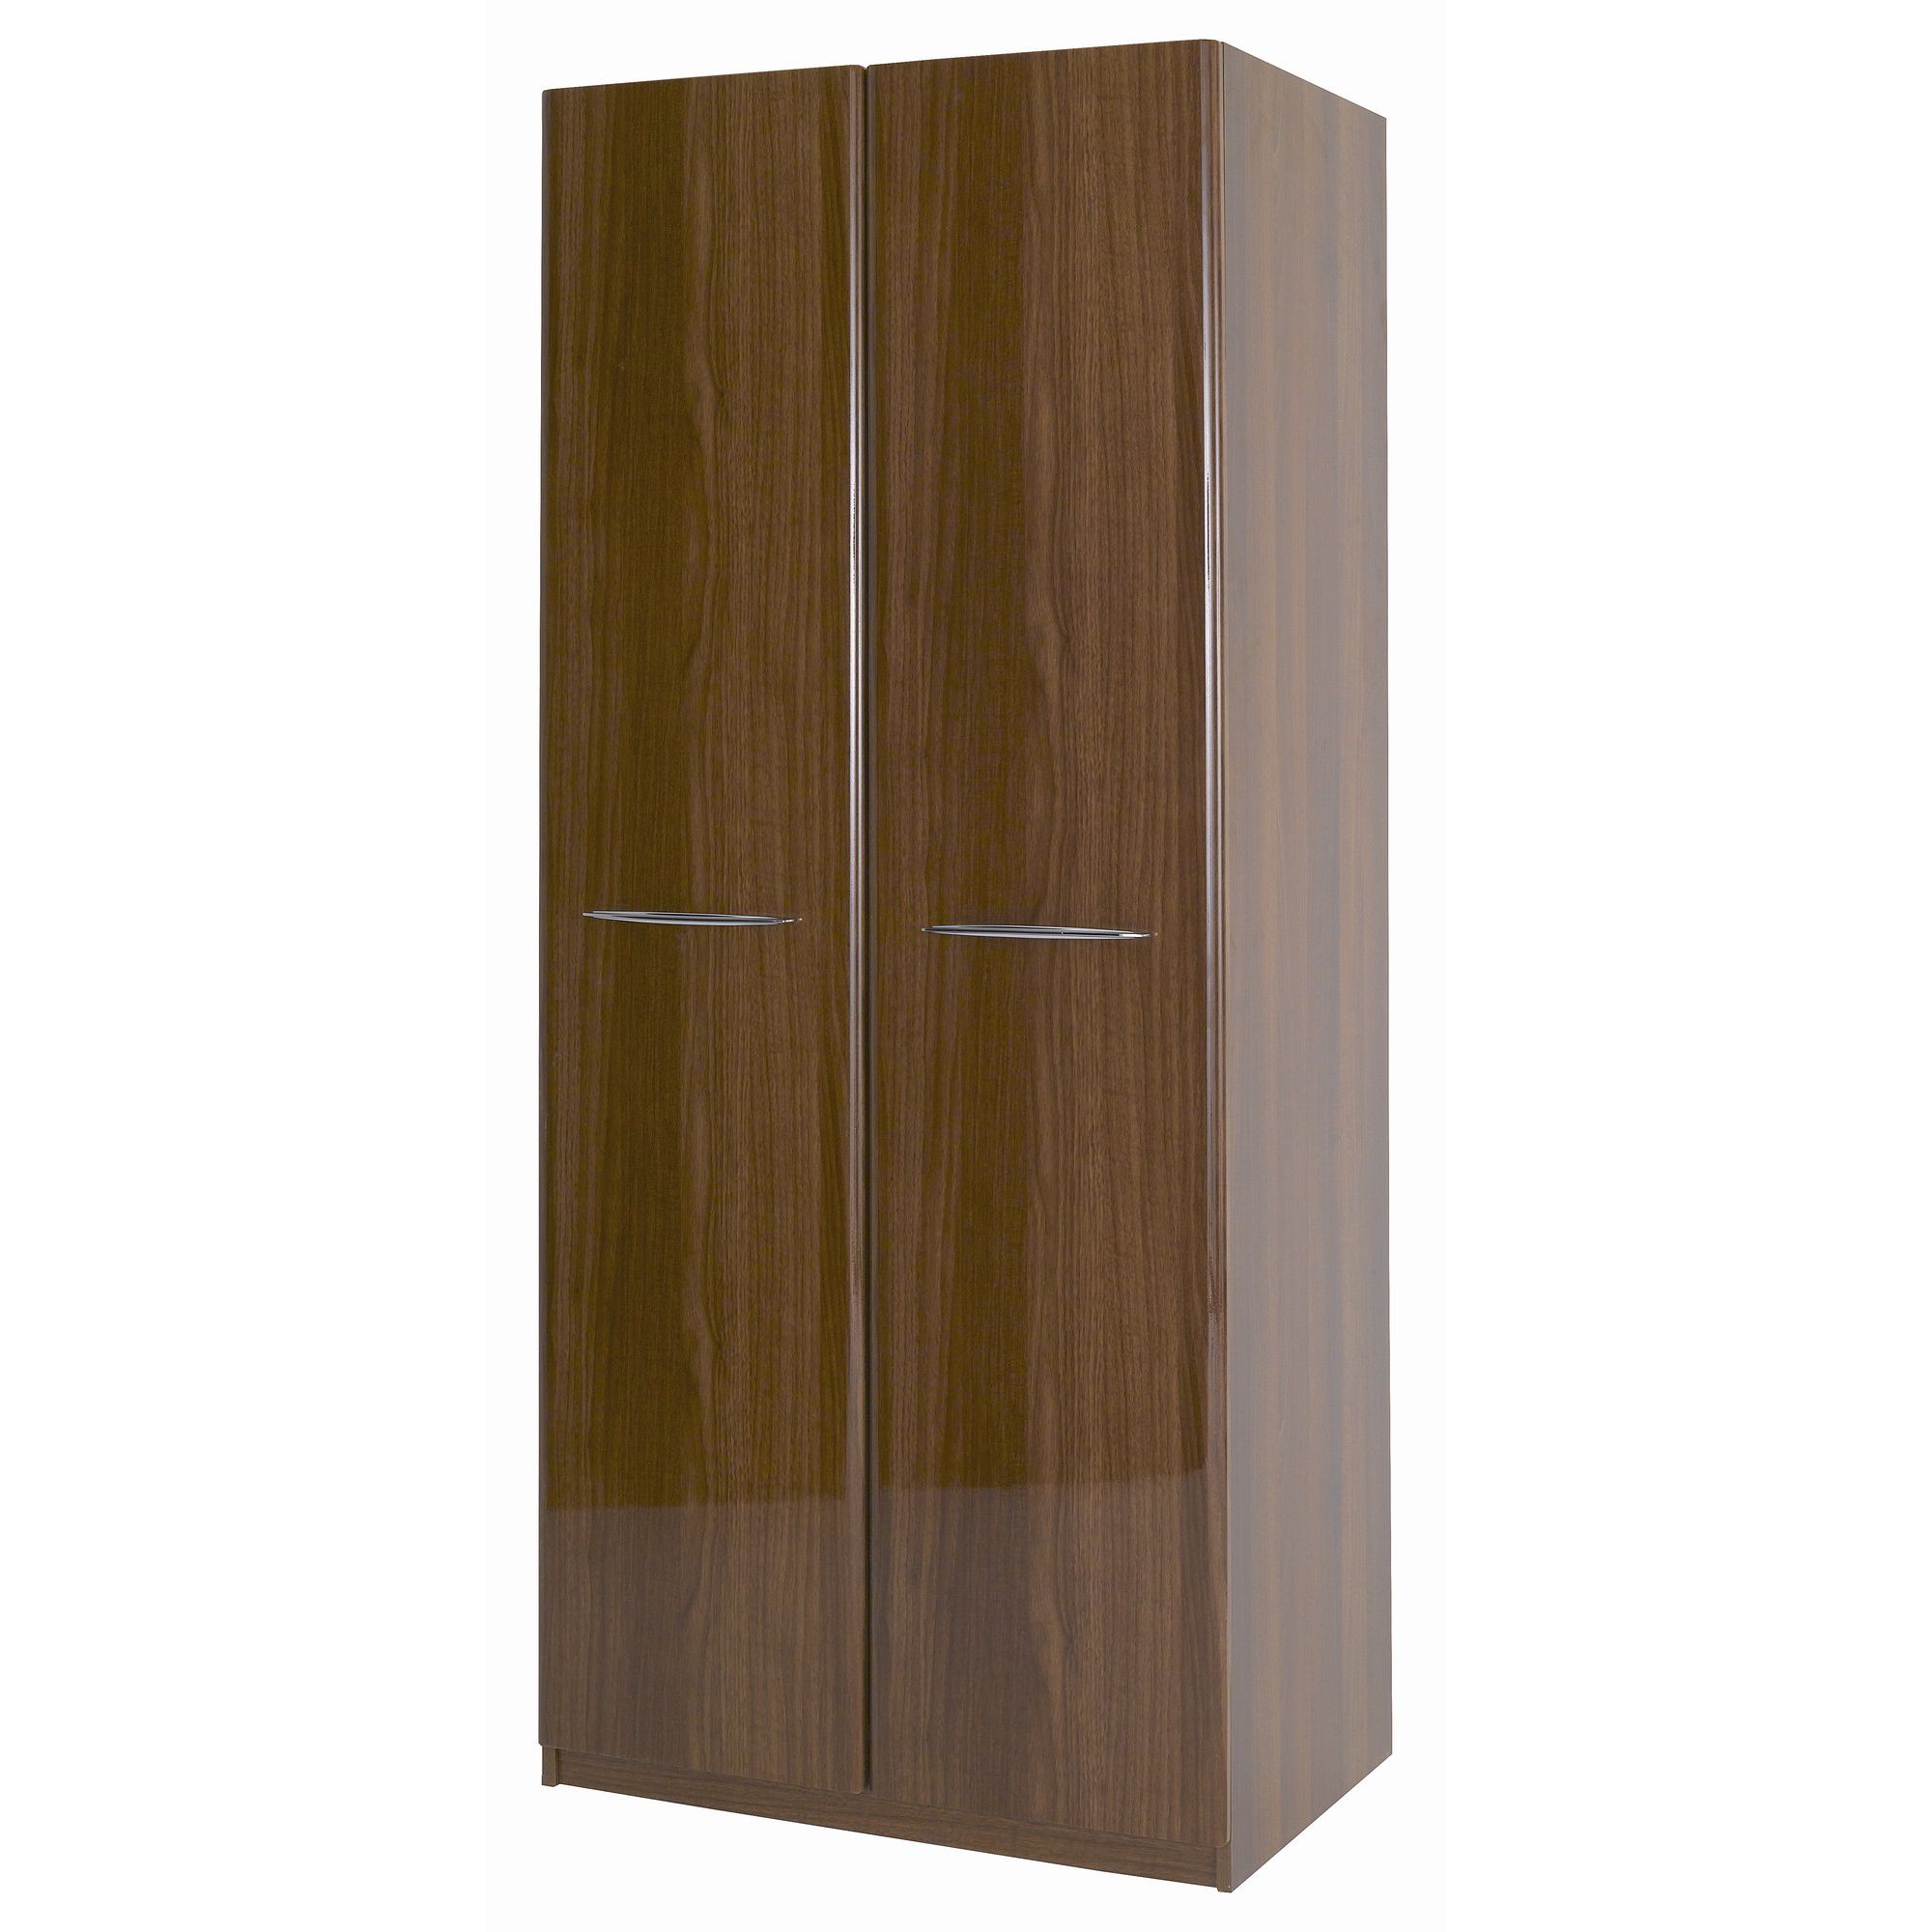 Alto Furniture Visualise Murano Two Door Wardrobe in High Gloss Walnut at Tescos Direct